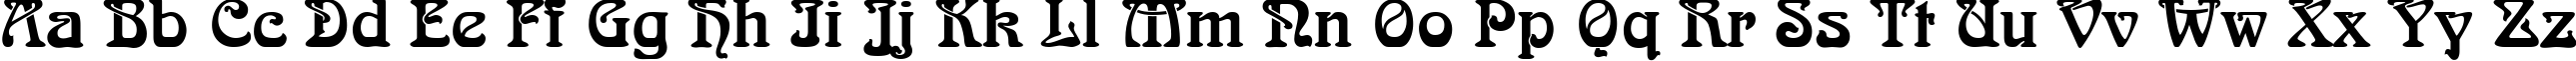 Пример написания английского алфавита шрифтом Arabia Plain:001.003